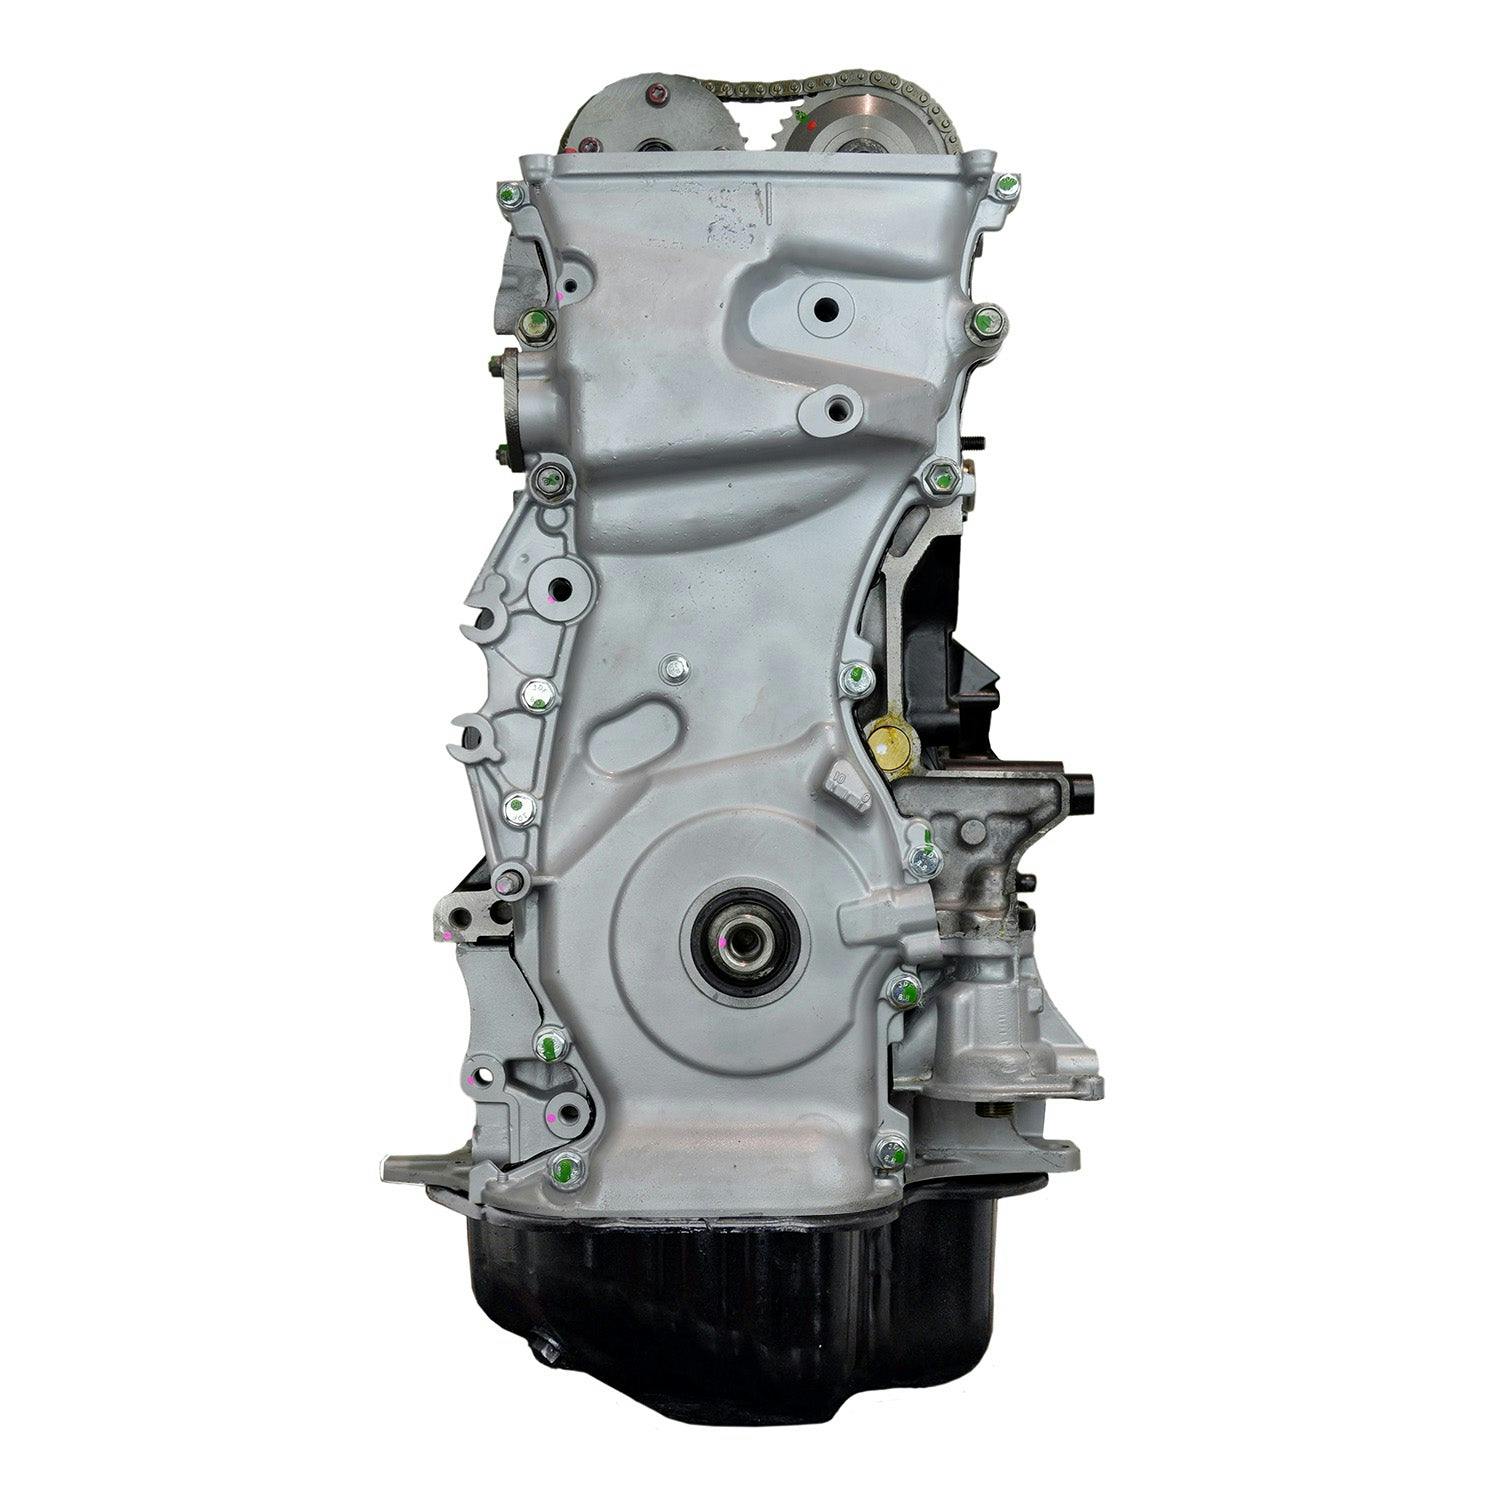 2.4L Inline-4 Engine for 2008-2015 Scion xB